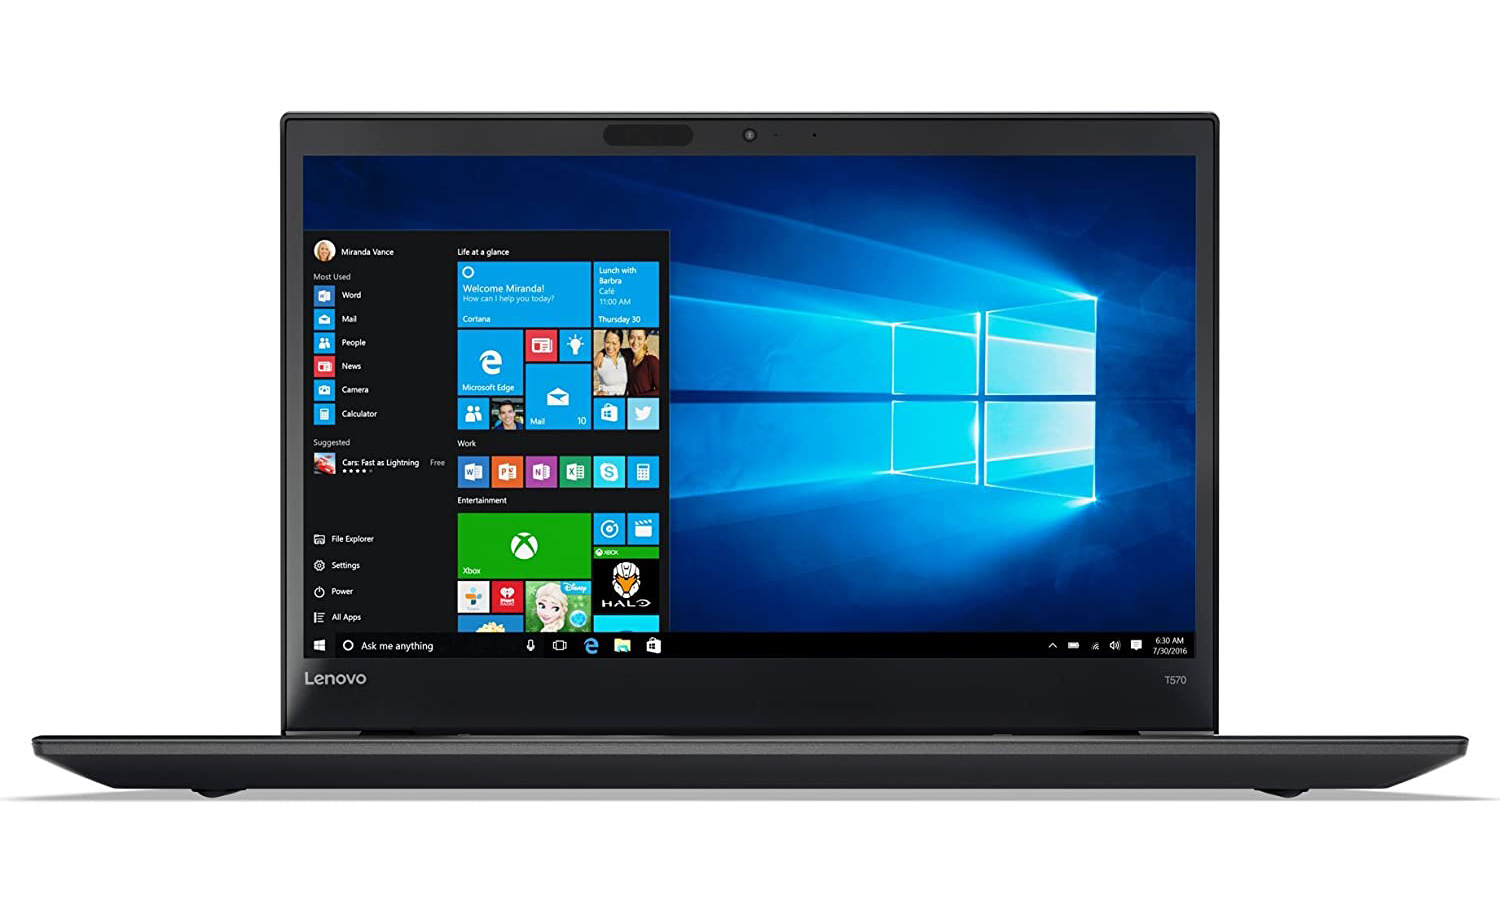 Lenovo ThinkPad T570 Intel Core i5 7th Gen 8GB RAM 500GB HDD Windows 10 Pro